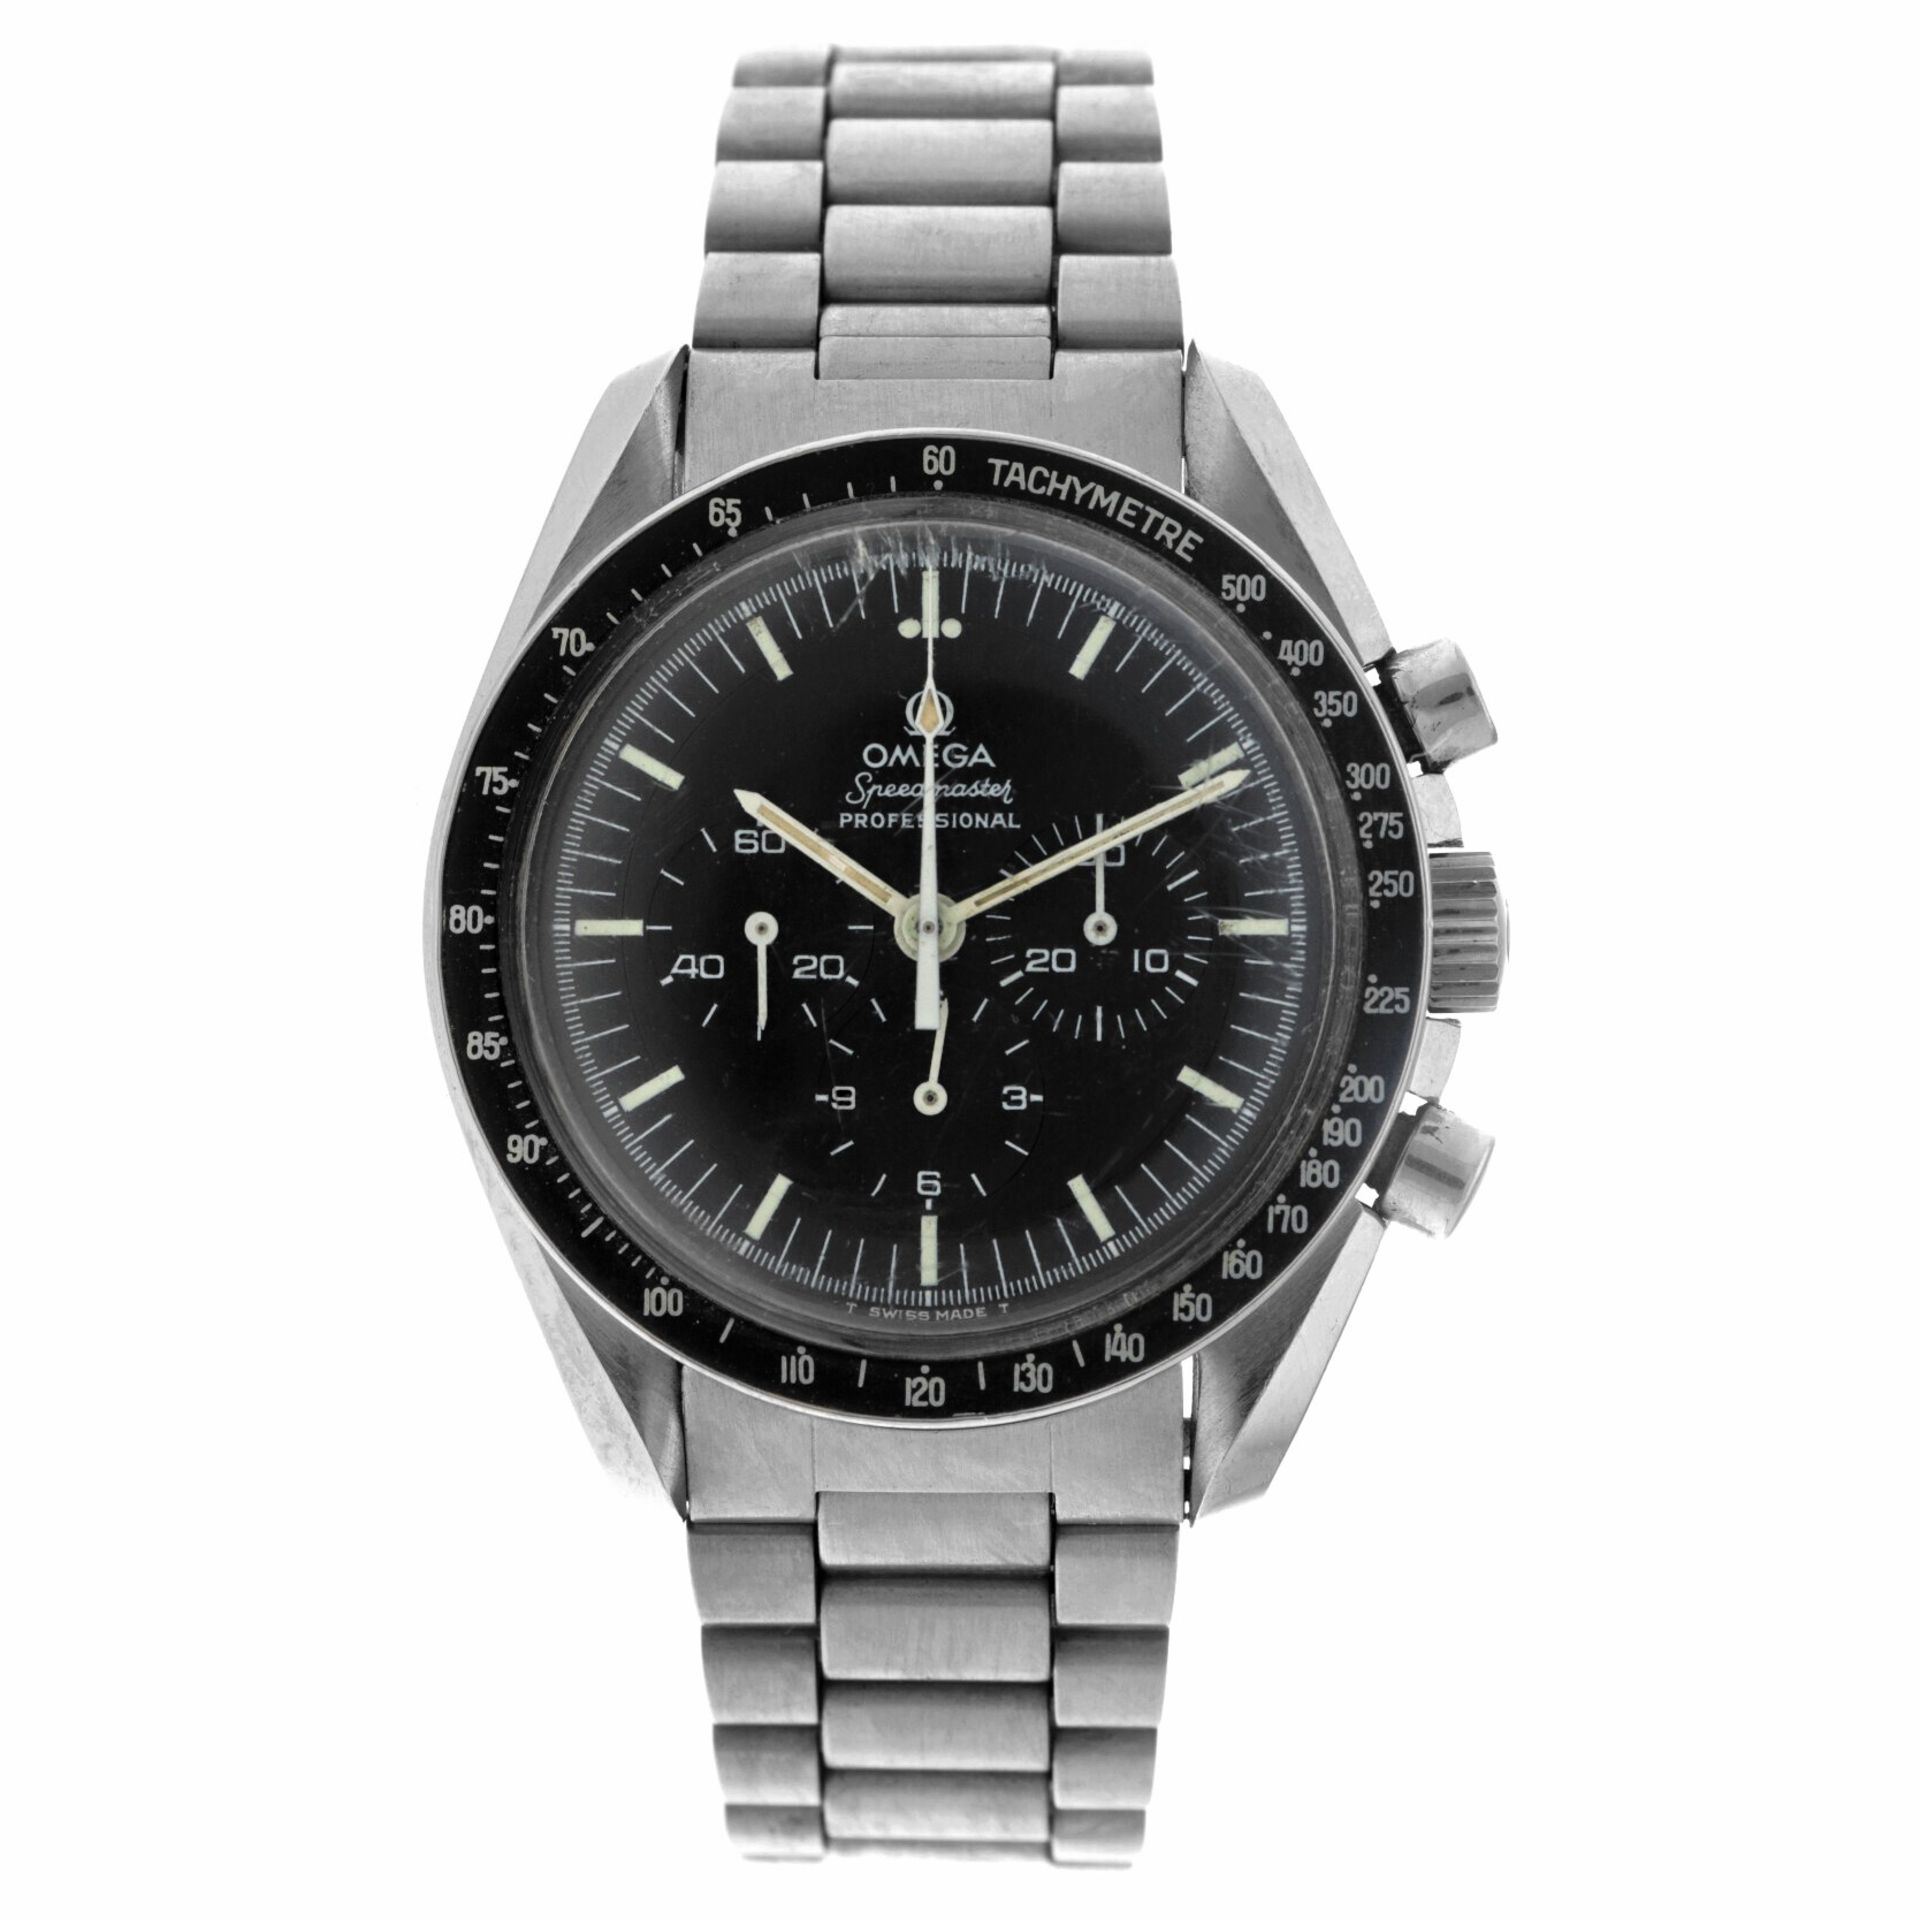 Omega Speedmaster Professional 145.022 - Men's watch - approx. 1971